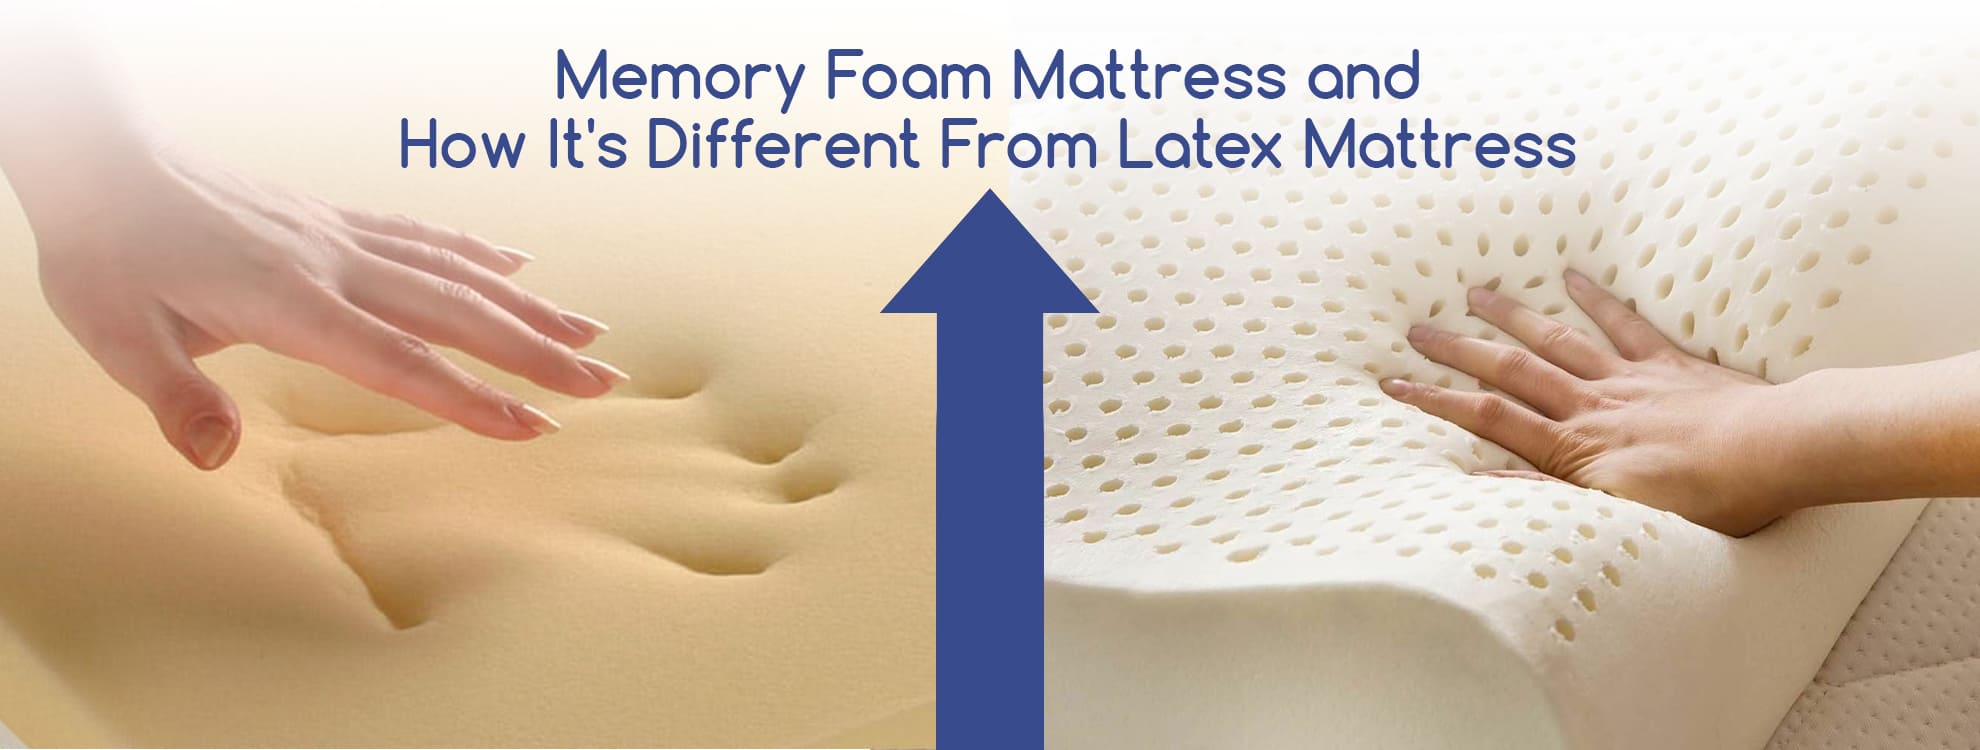 Memory Foam And Latex Mattress